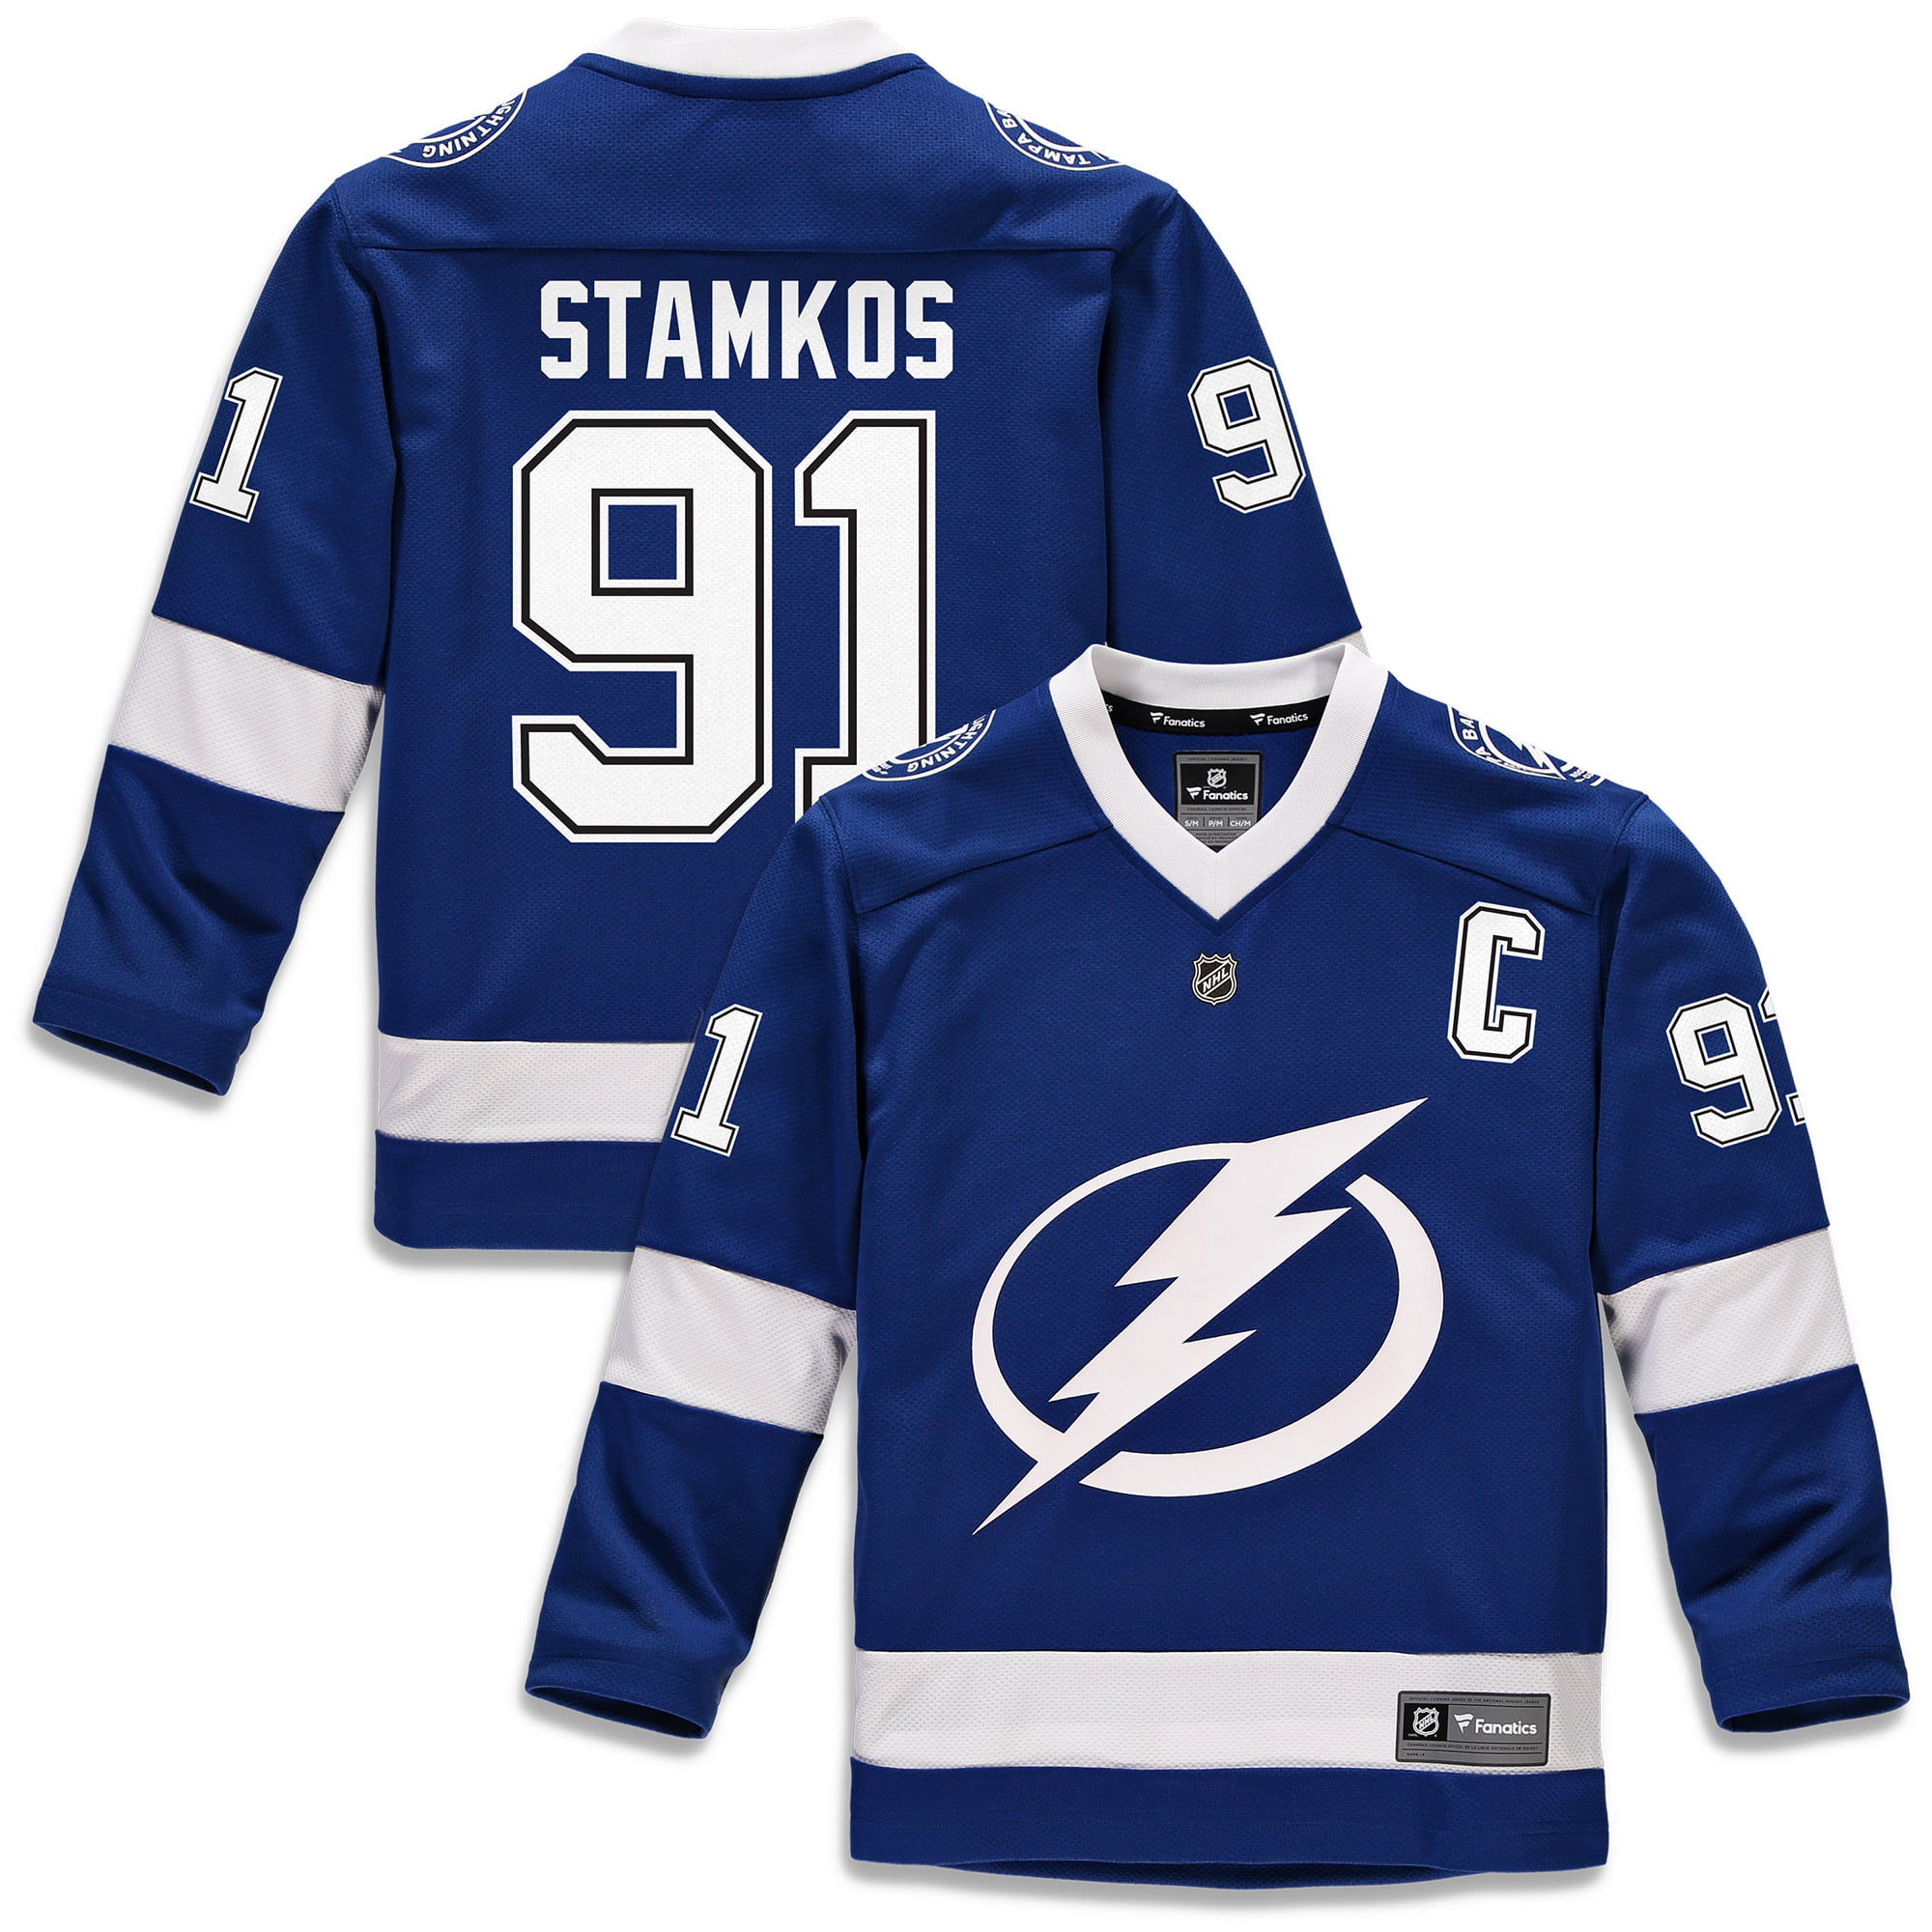 Steven Stamkos Tampa Bay Lightning Fanatics Branded Youth Replica Player Jersey - Blue ...